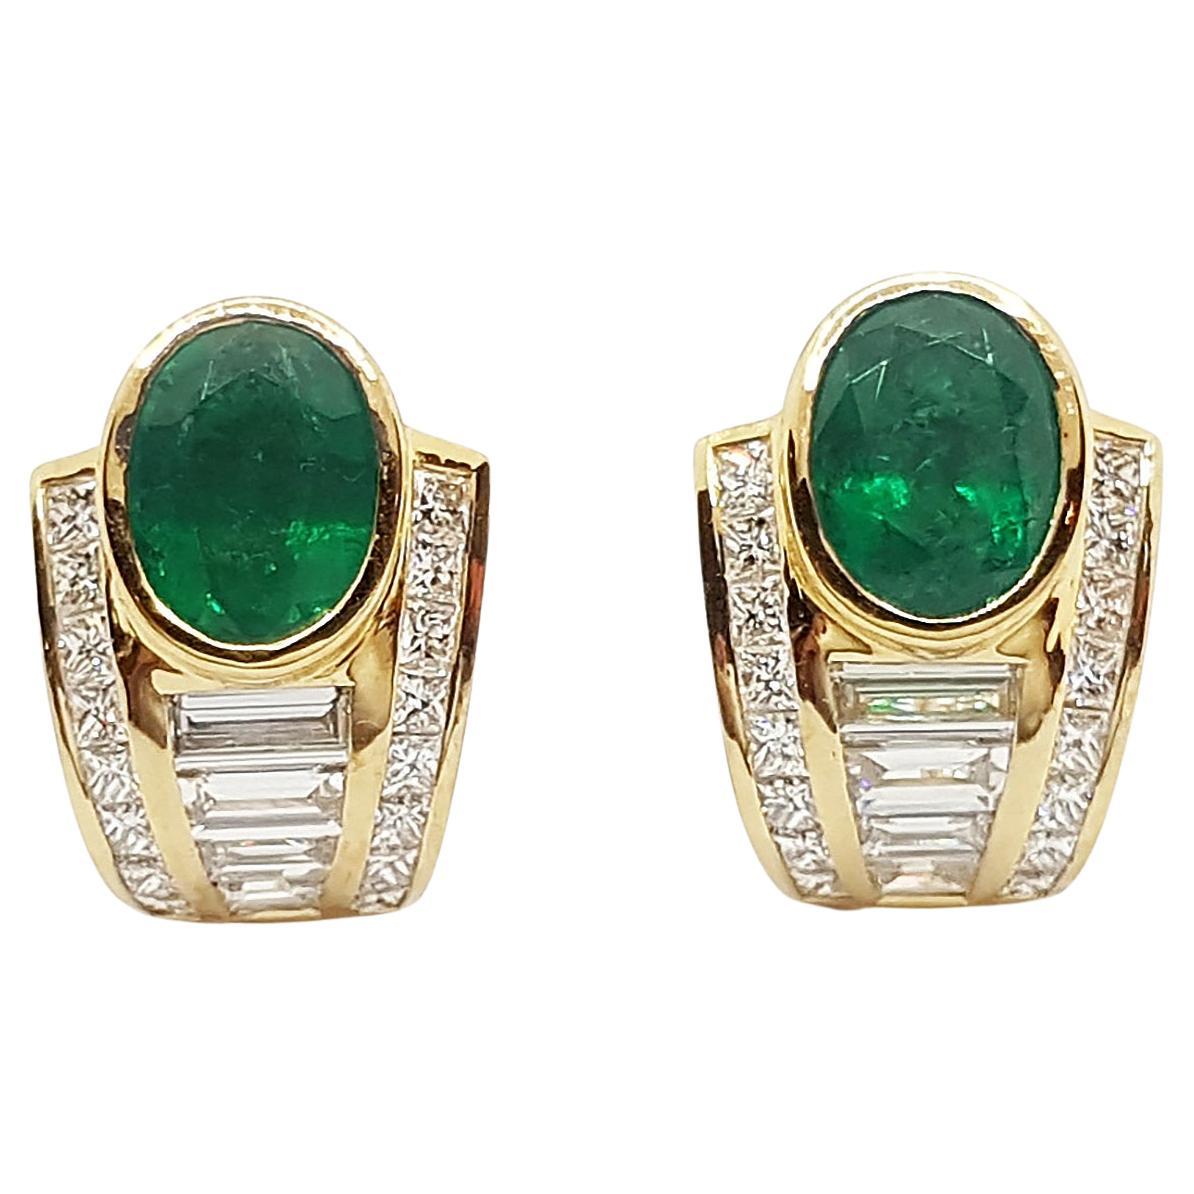 Emerald and Diamond Earrings set in 18K Gold Settings